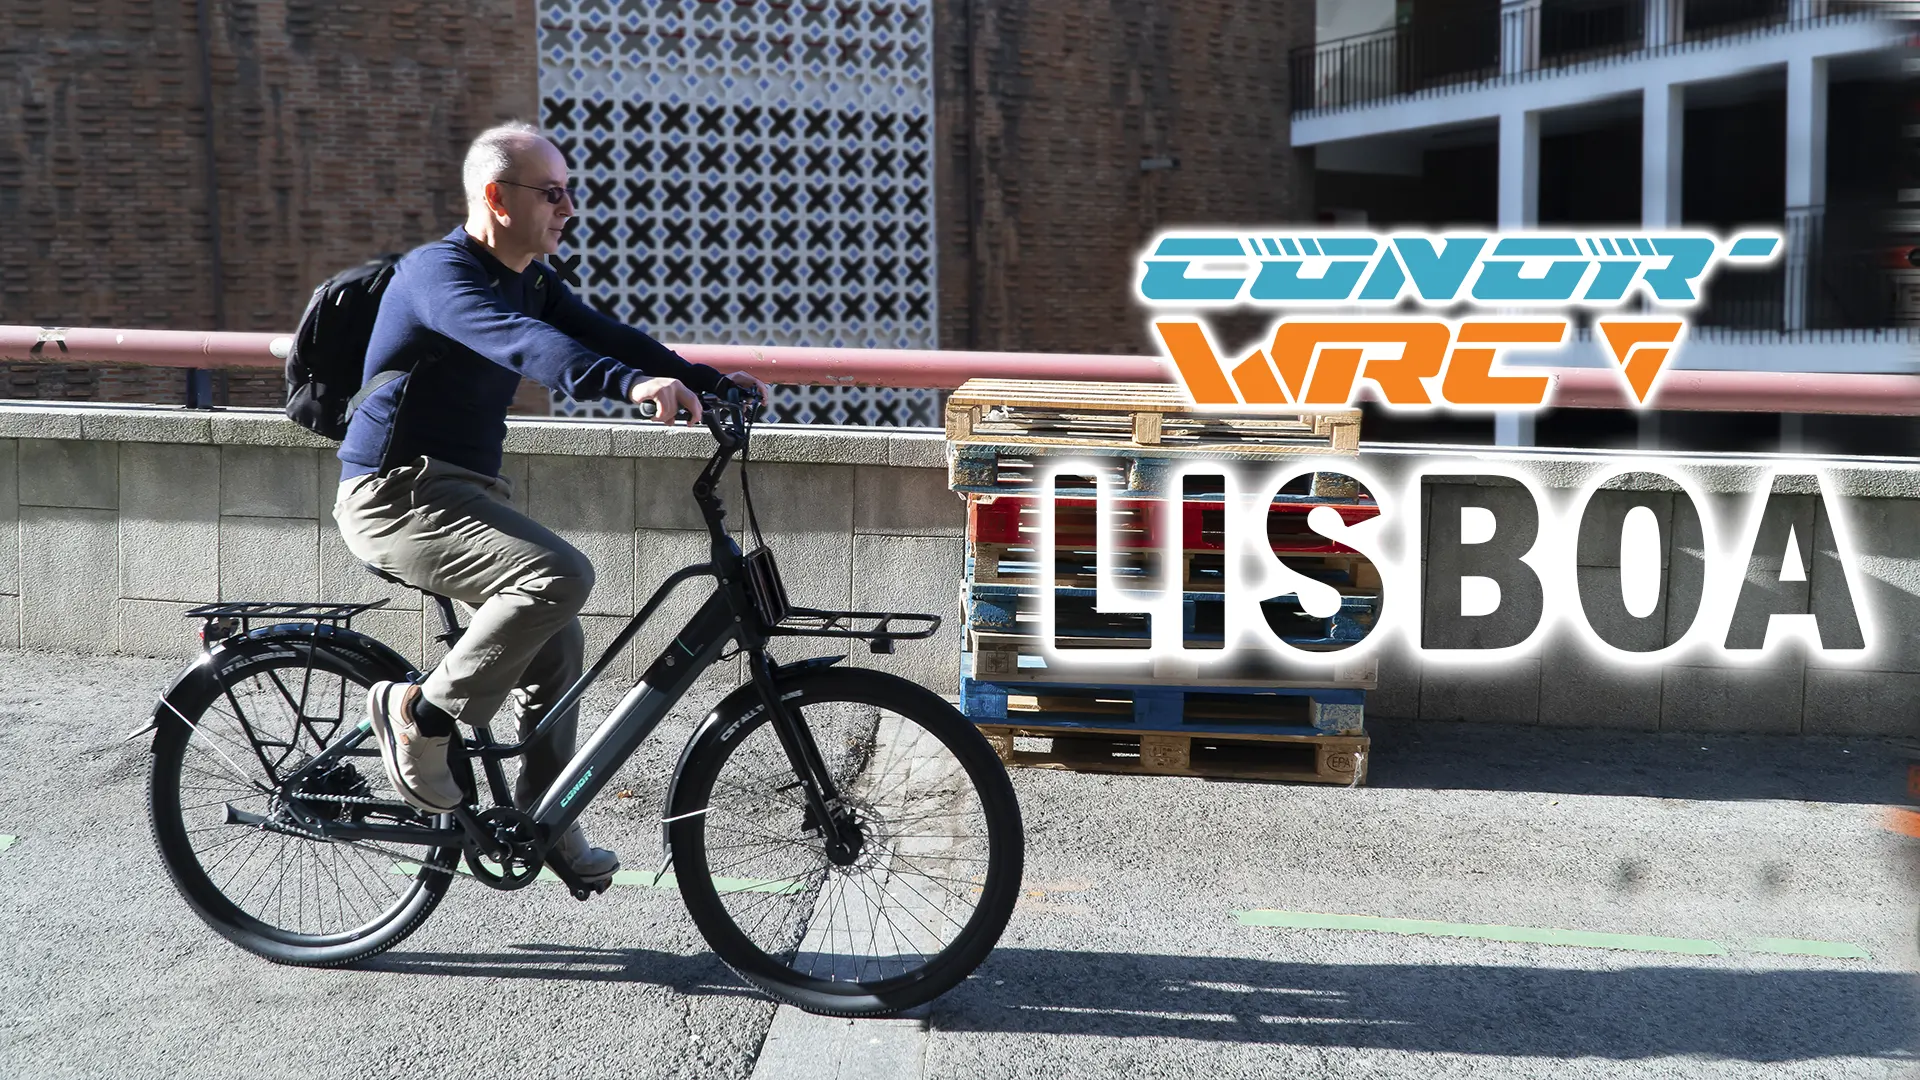 Conor Lisboa, la e-Bike con transmisión automática